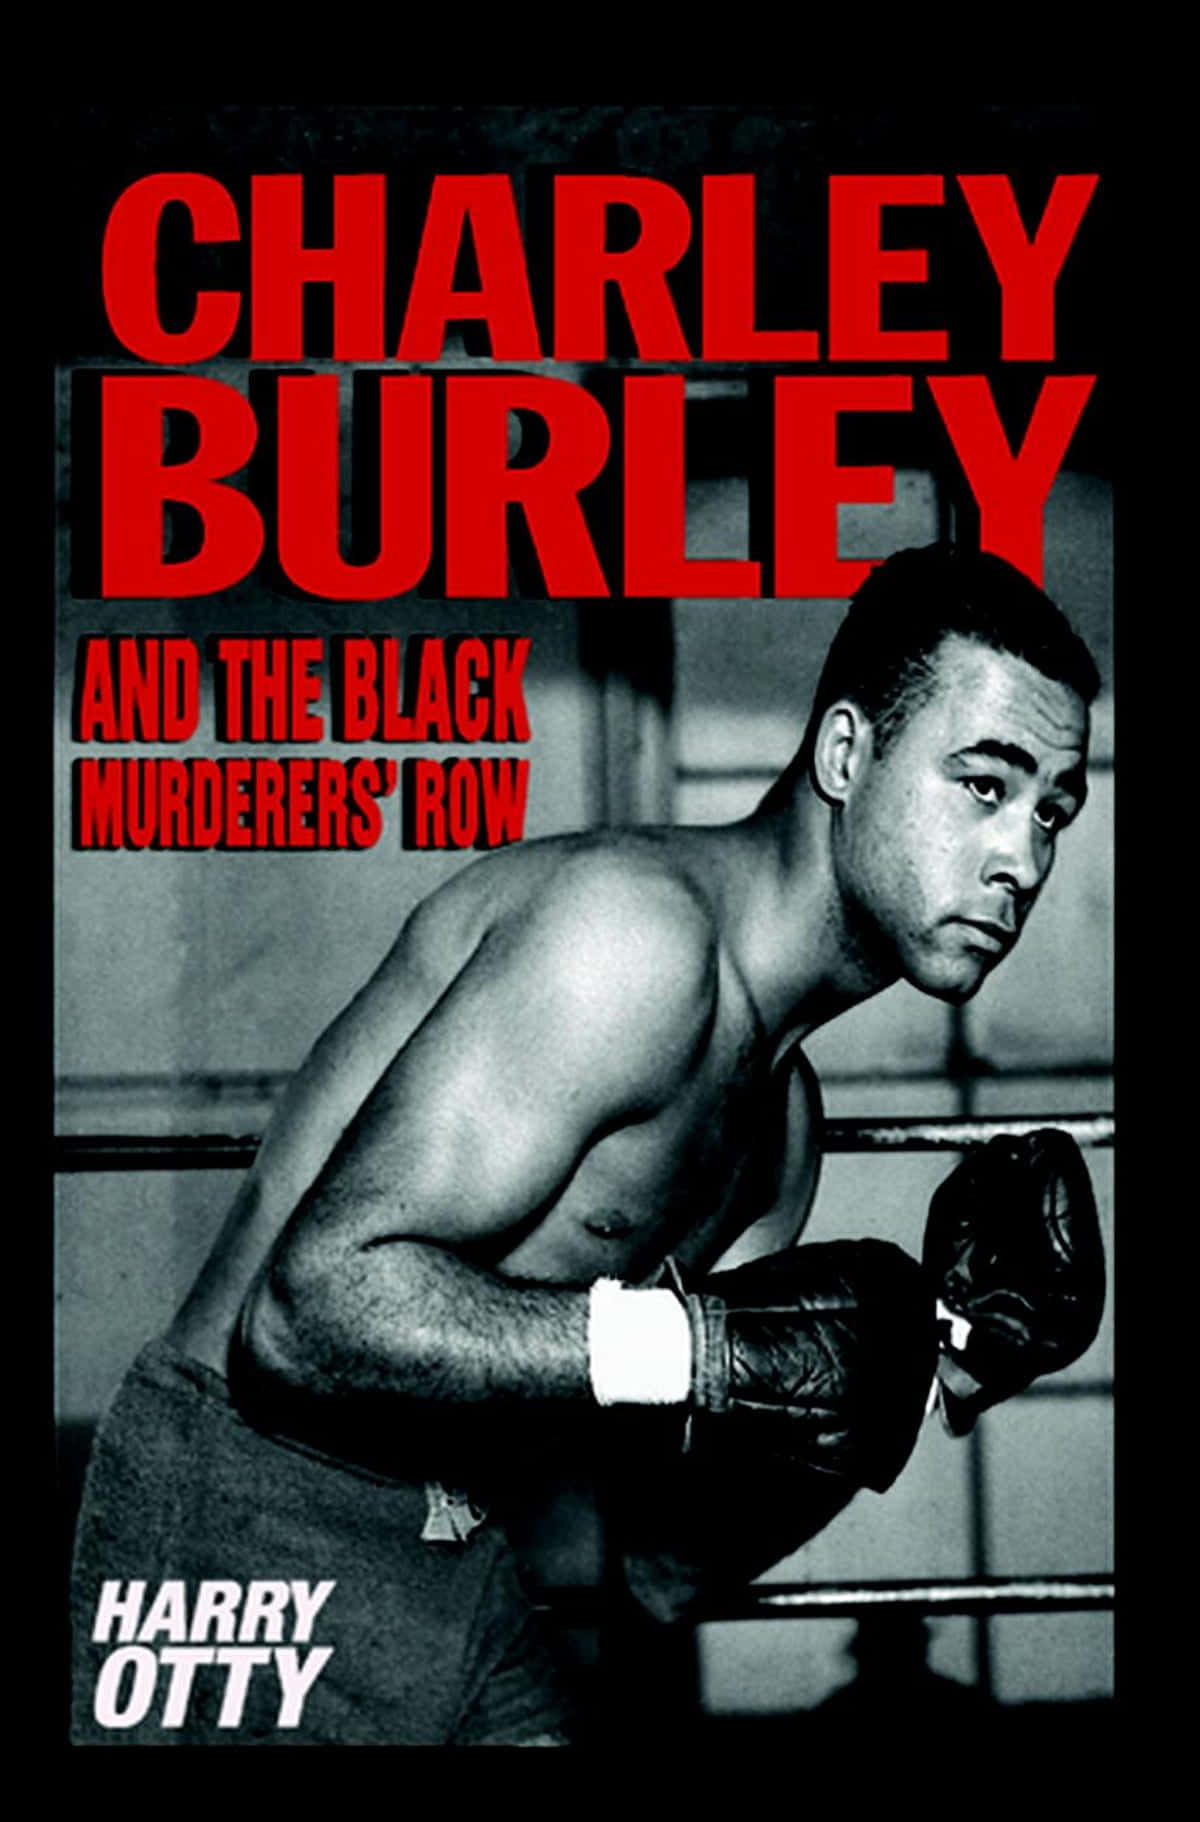 Legendary Boxer Charley Burley In Action Wallpaper